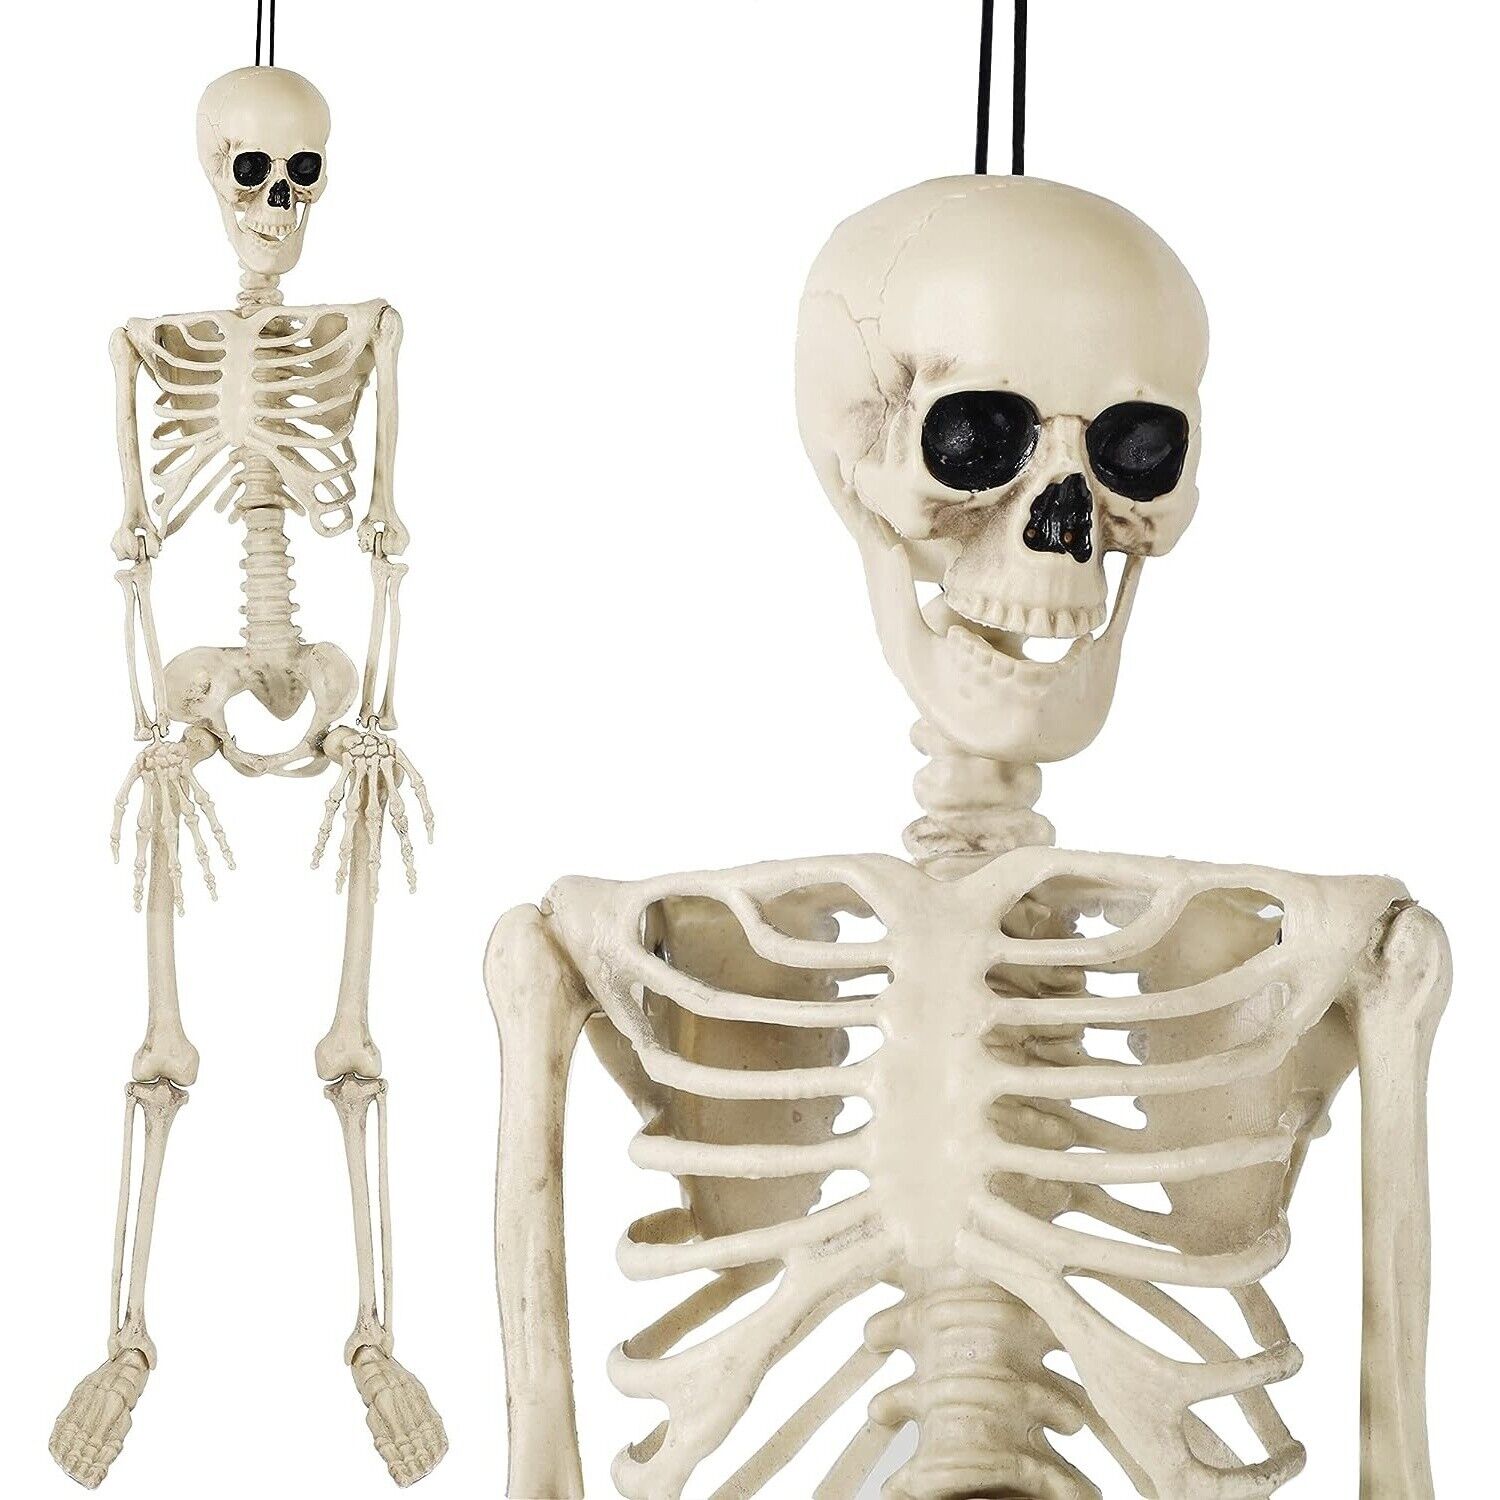 Juegoal Halloween 3 ft Skeleton, Full Body Skeleton, 1/2 Life Size Human